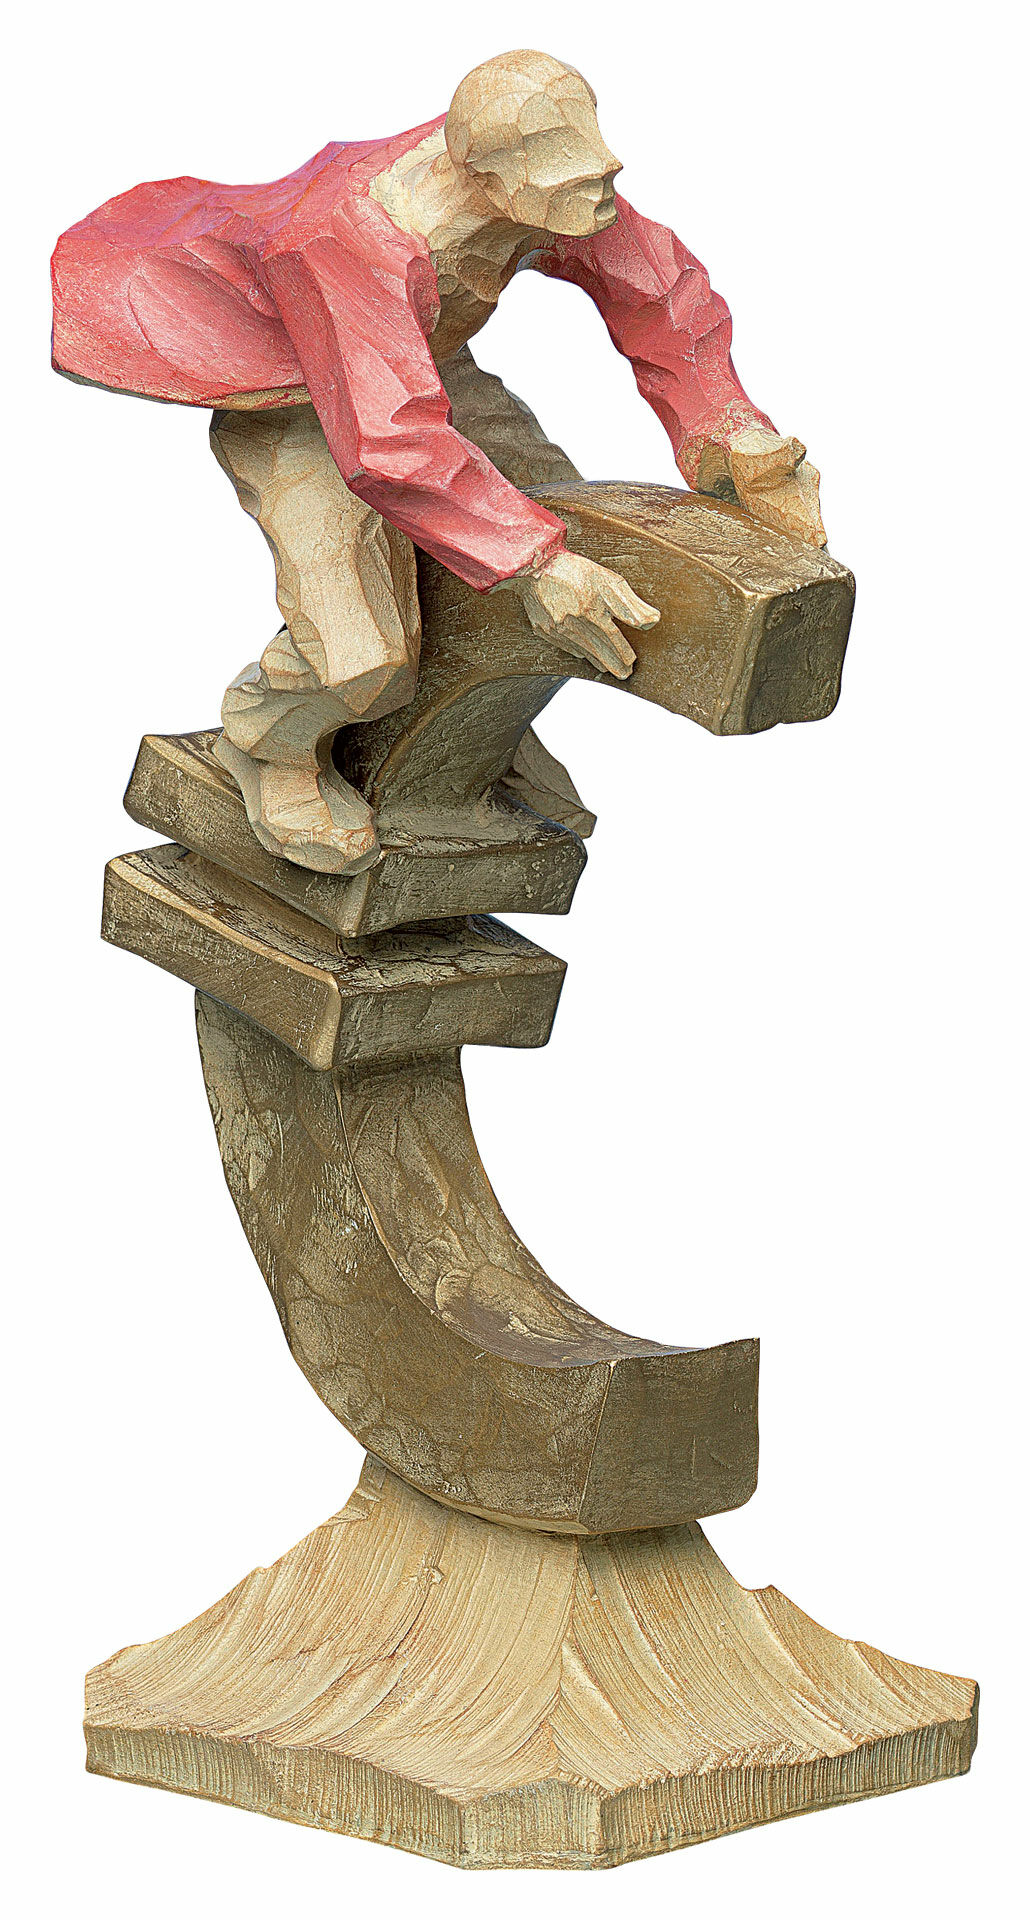 Skulptur "Bankmand", støbt træfinish von Roman Johann Strobl